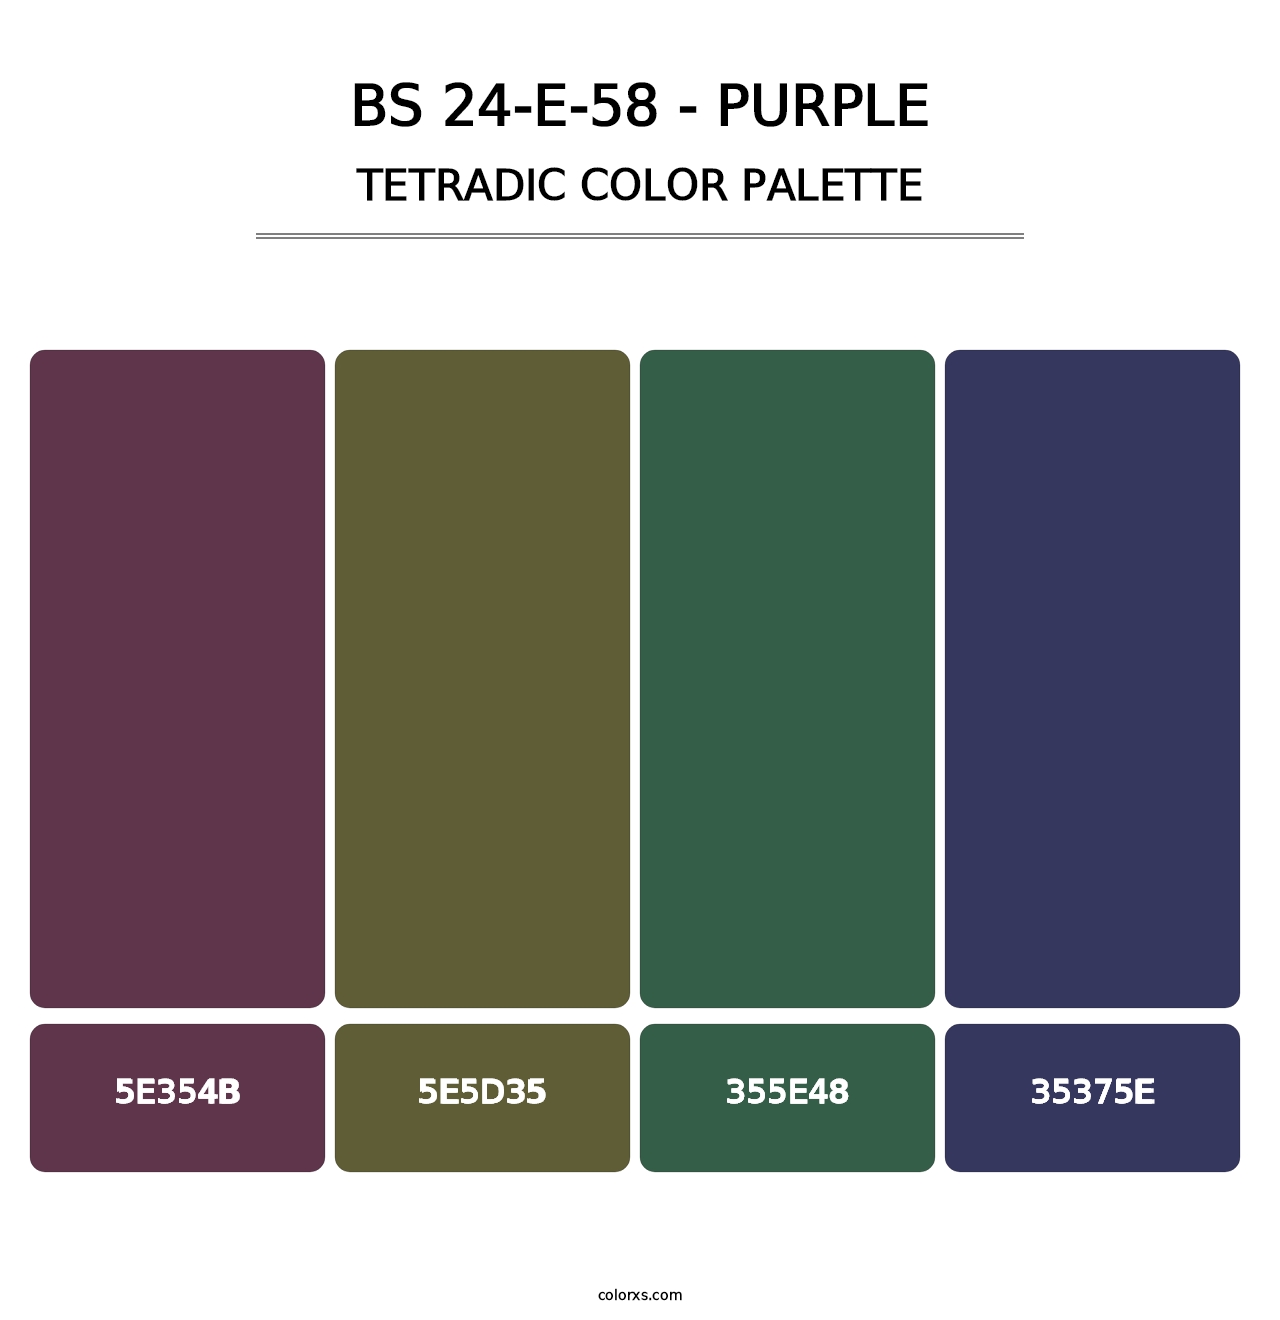 BS 24-E-58 - Purple - Tetradic Color Palette